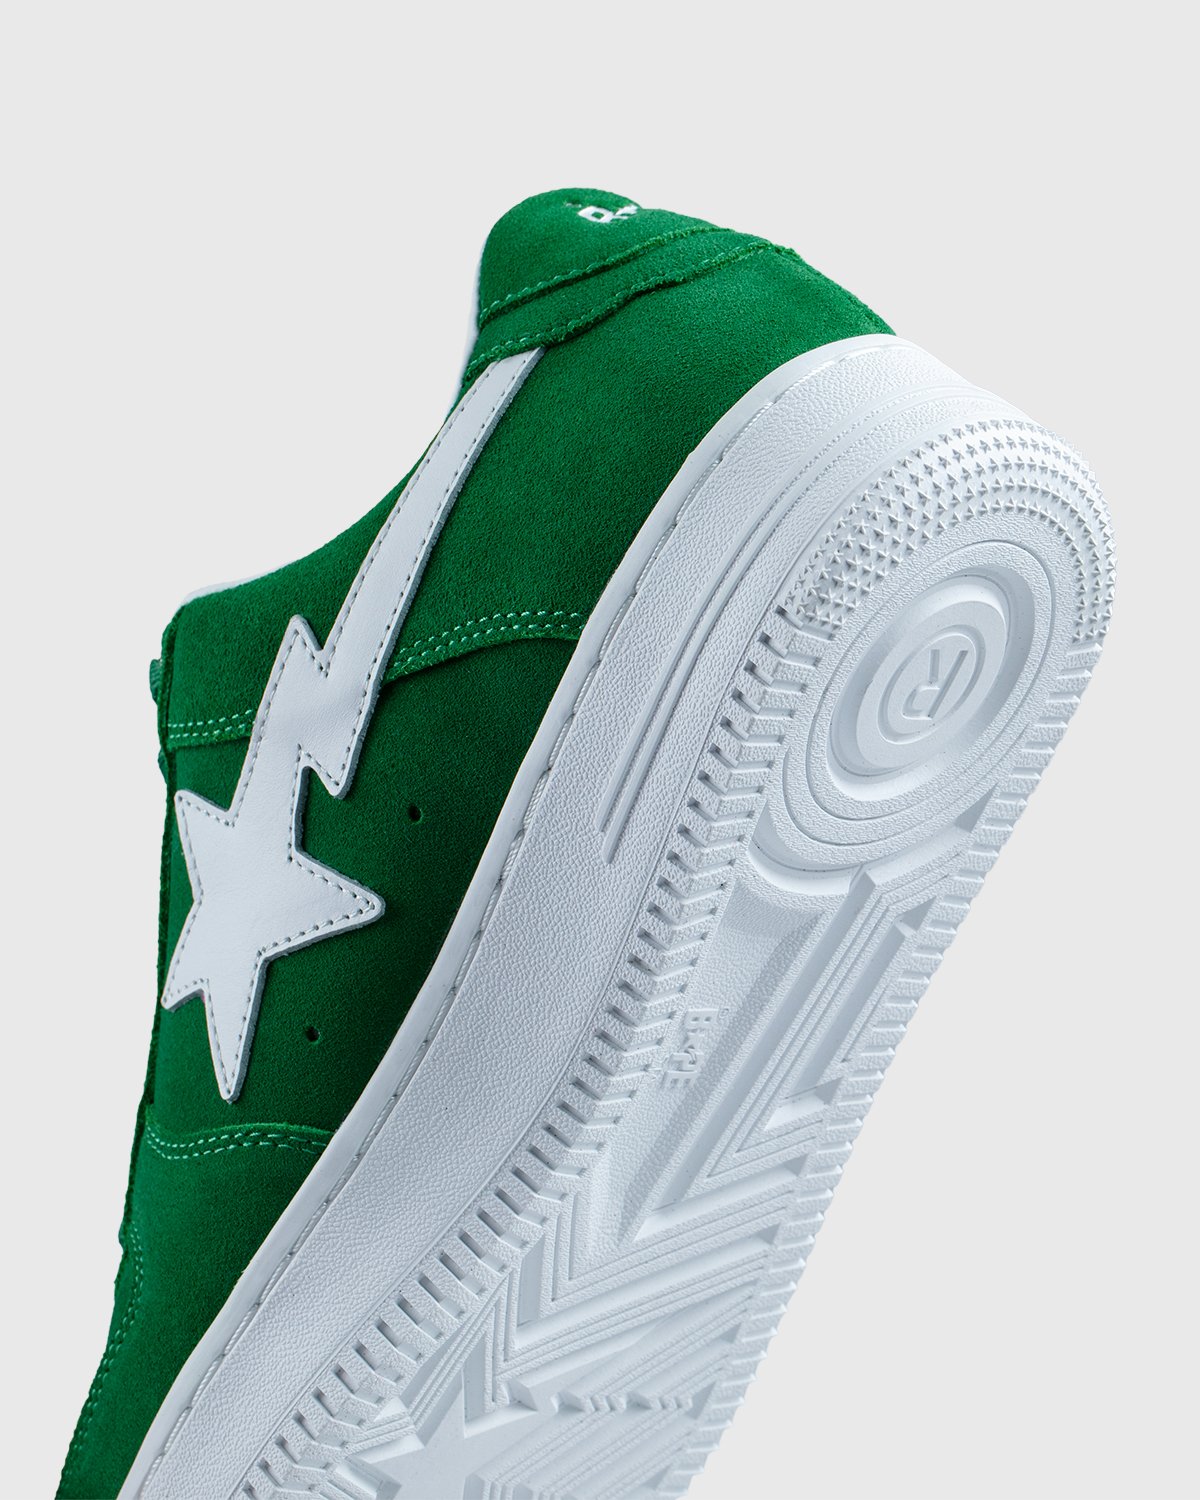 BAPE x Highsnobiety - BAPE STA Green - Footwear - Green - Image 5